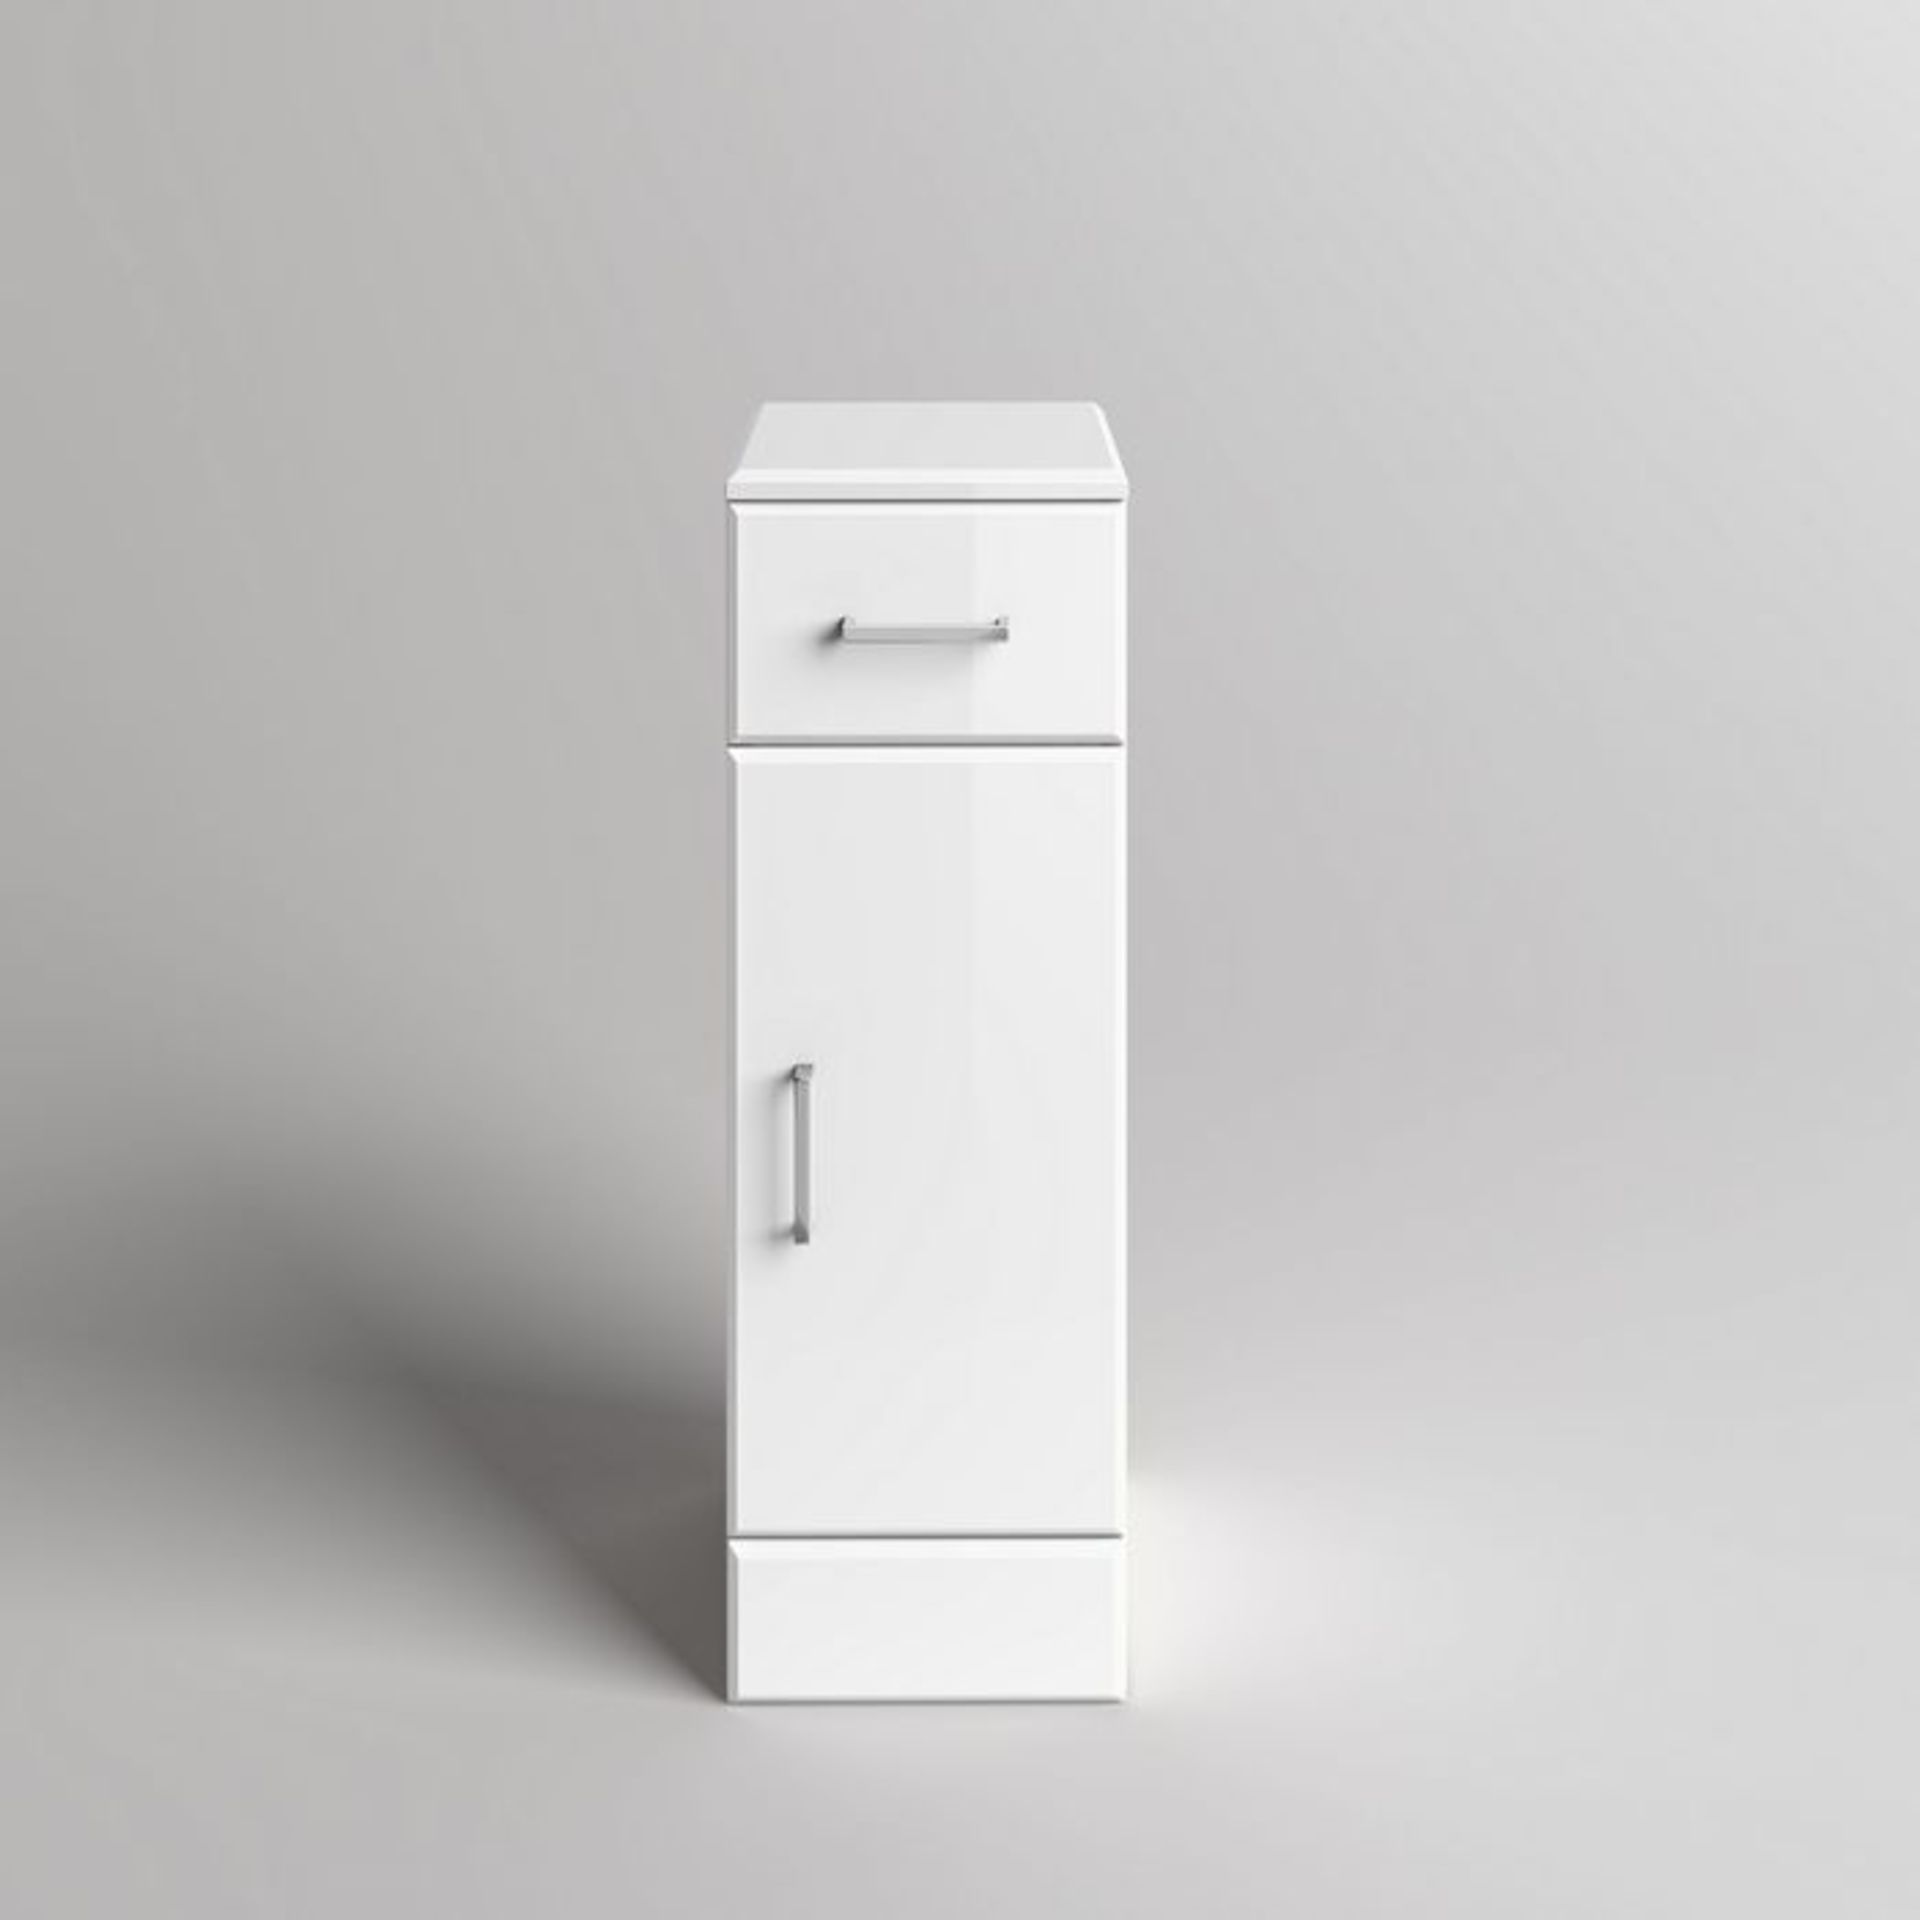 (Y194) 250x300mm Quartz Gloss White Small Side Cabinet Unit. RRP £143.99. Pristine gloss white - Image 6 of 6